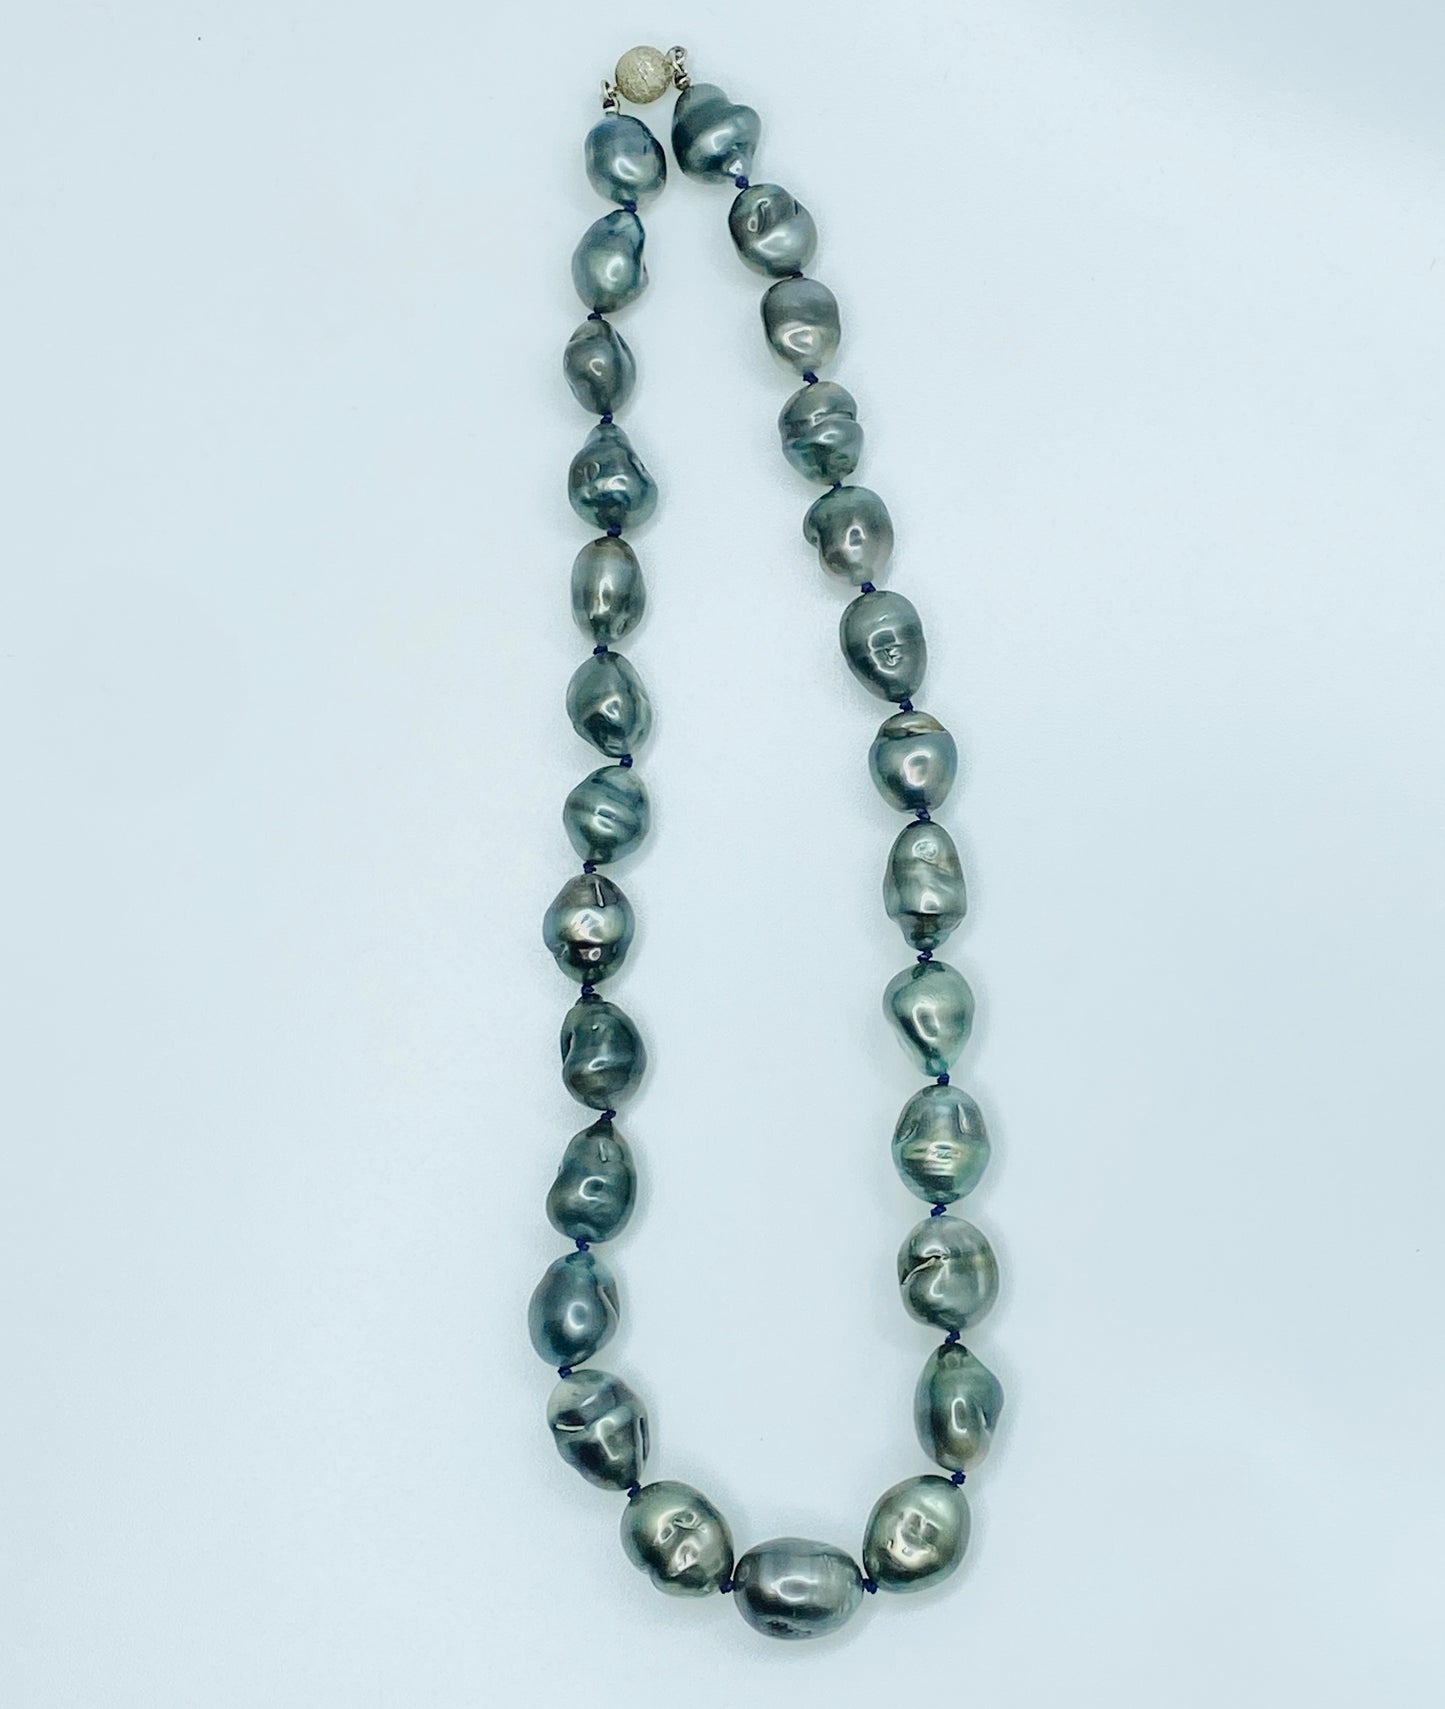 Tahitian Black Pearl Necklace